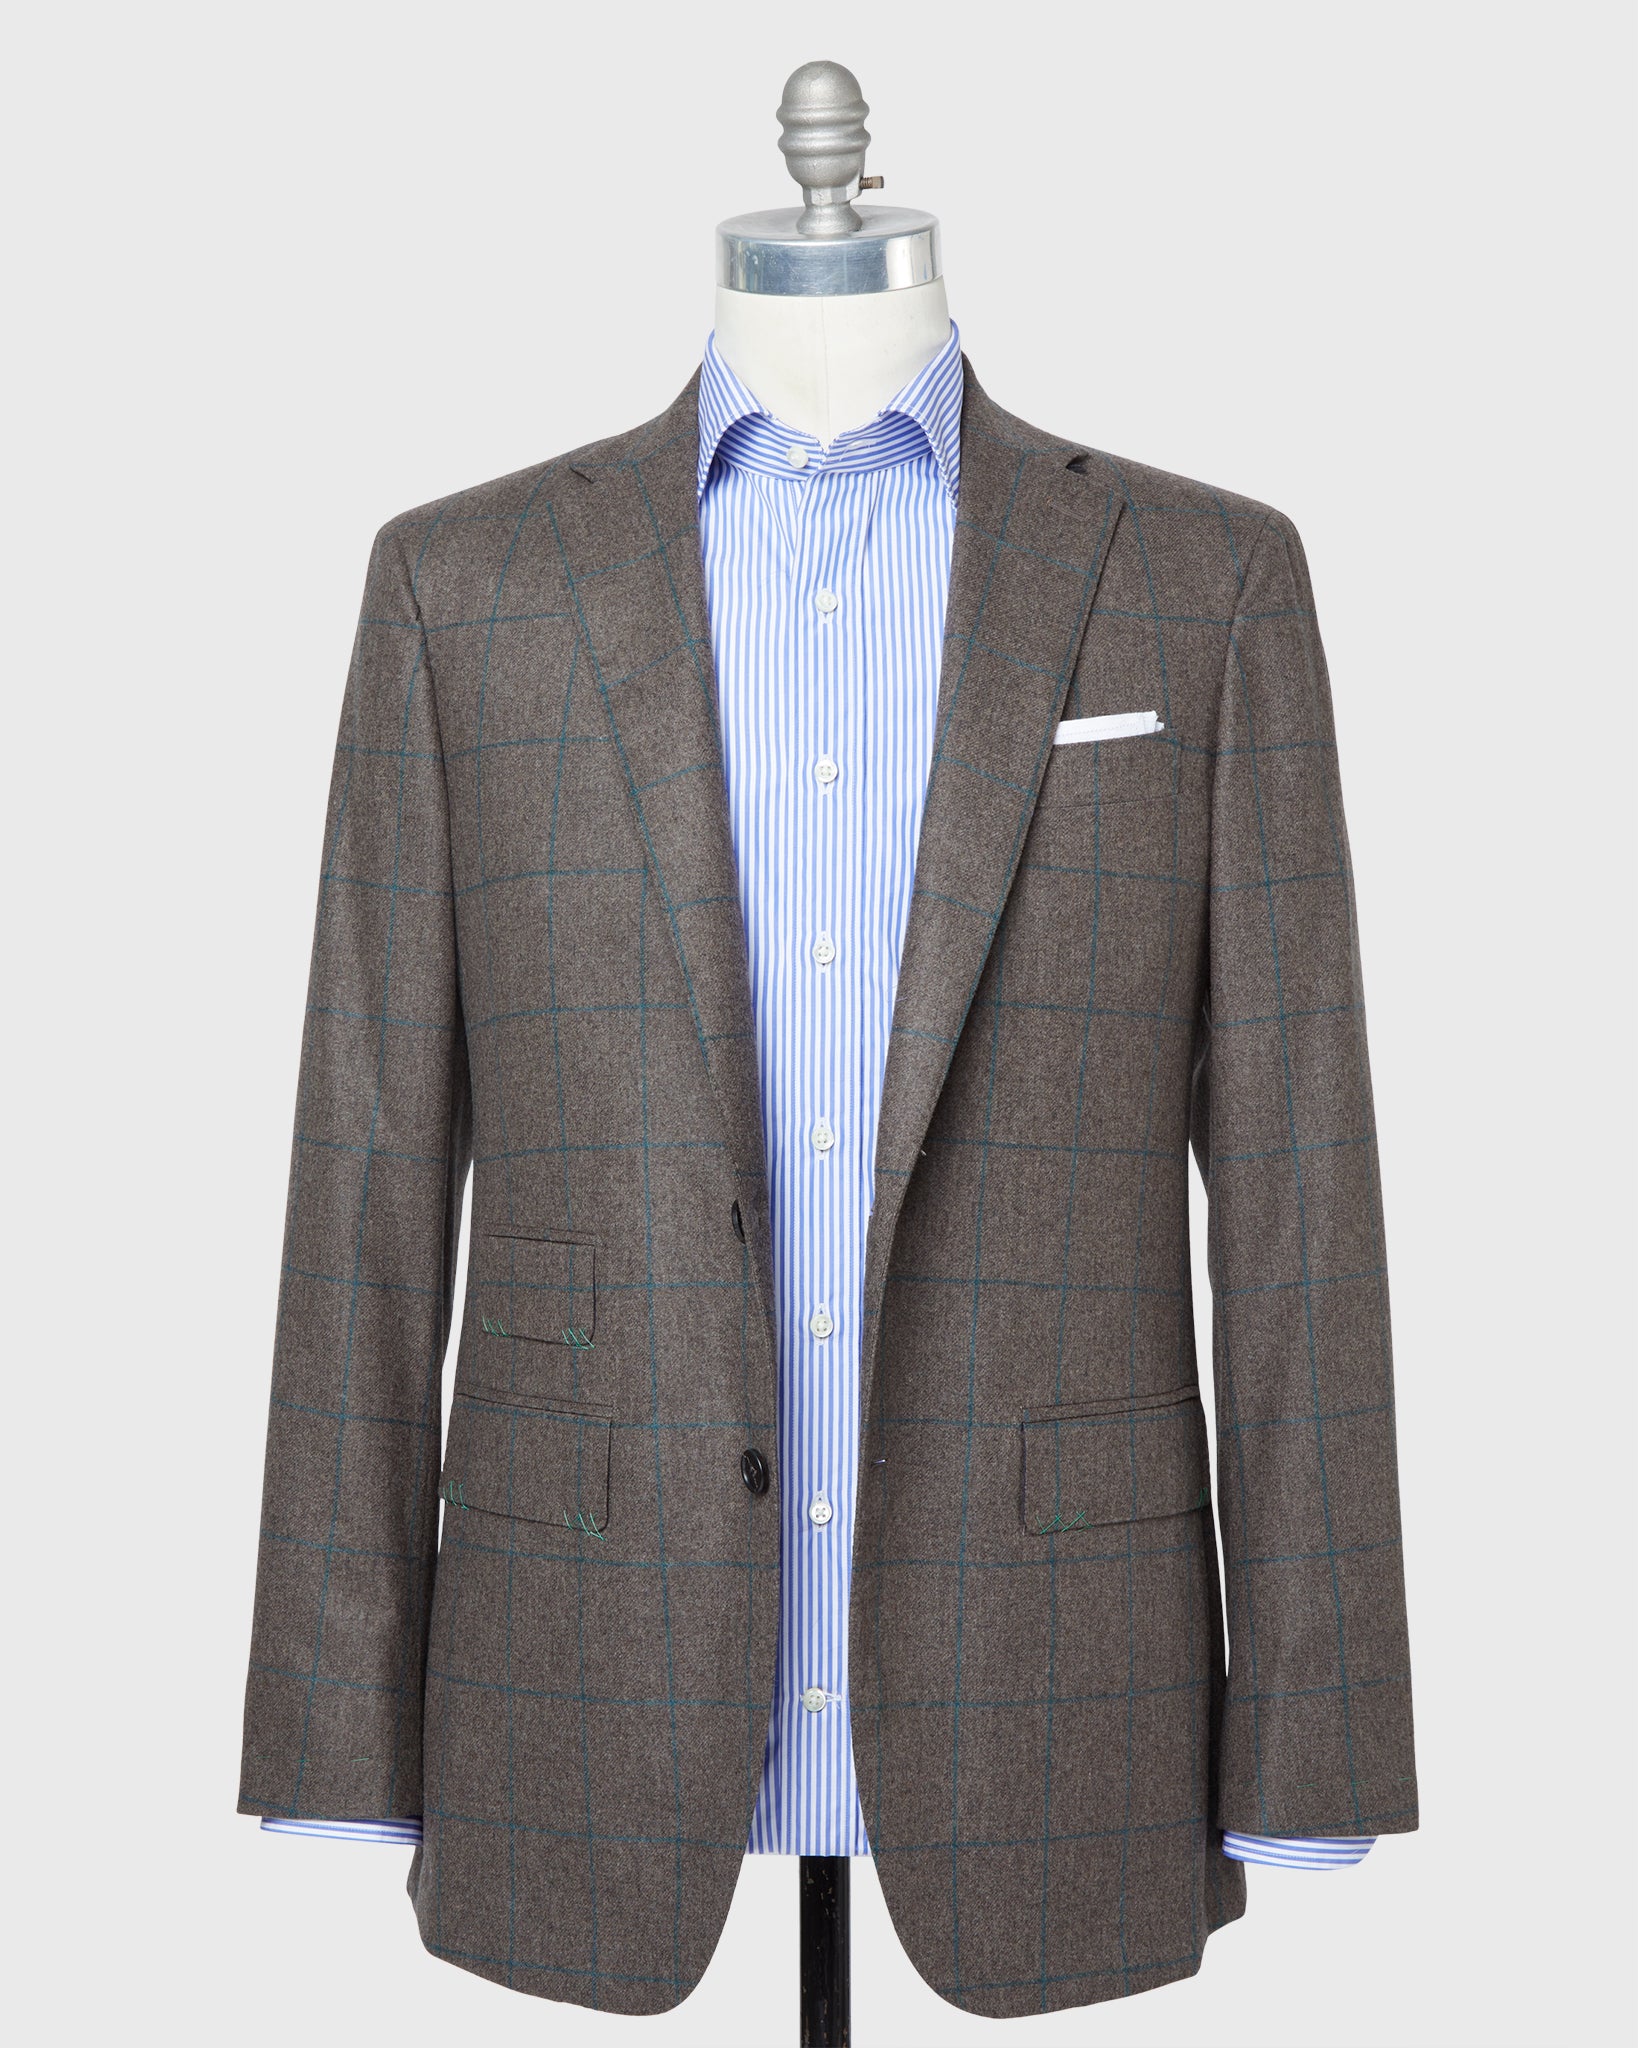 Virgil No. 3 Suit in Brown/Bluegrass Windowpane Flannel